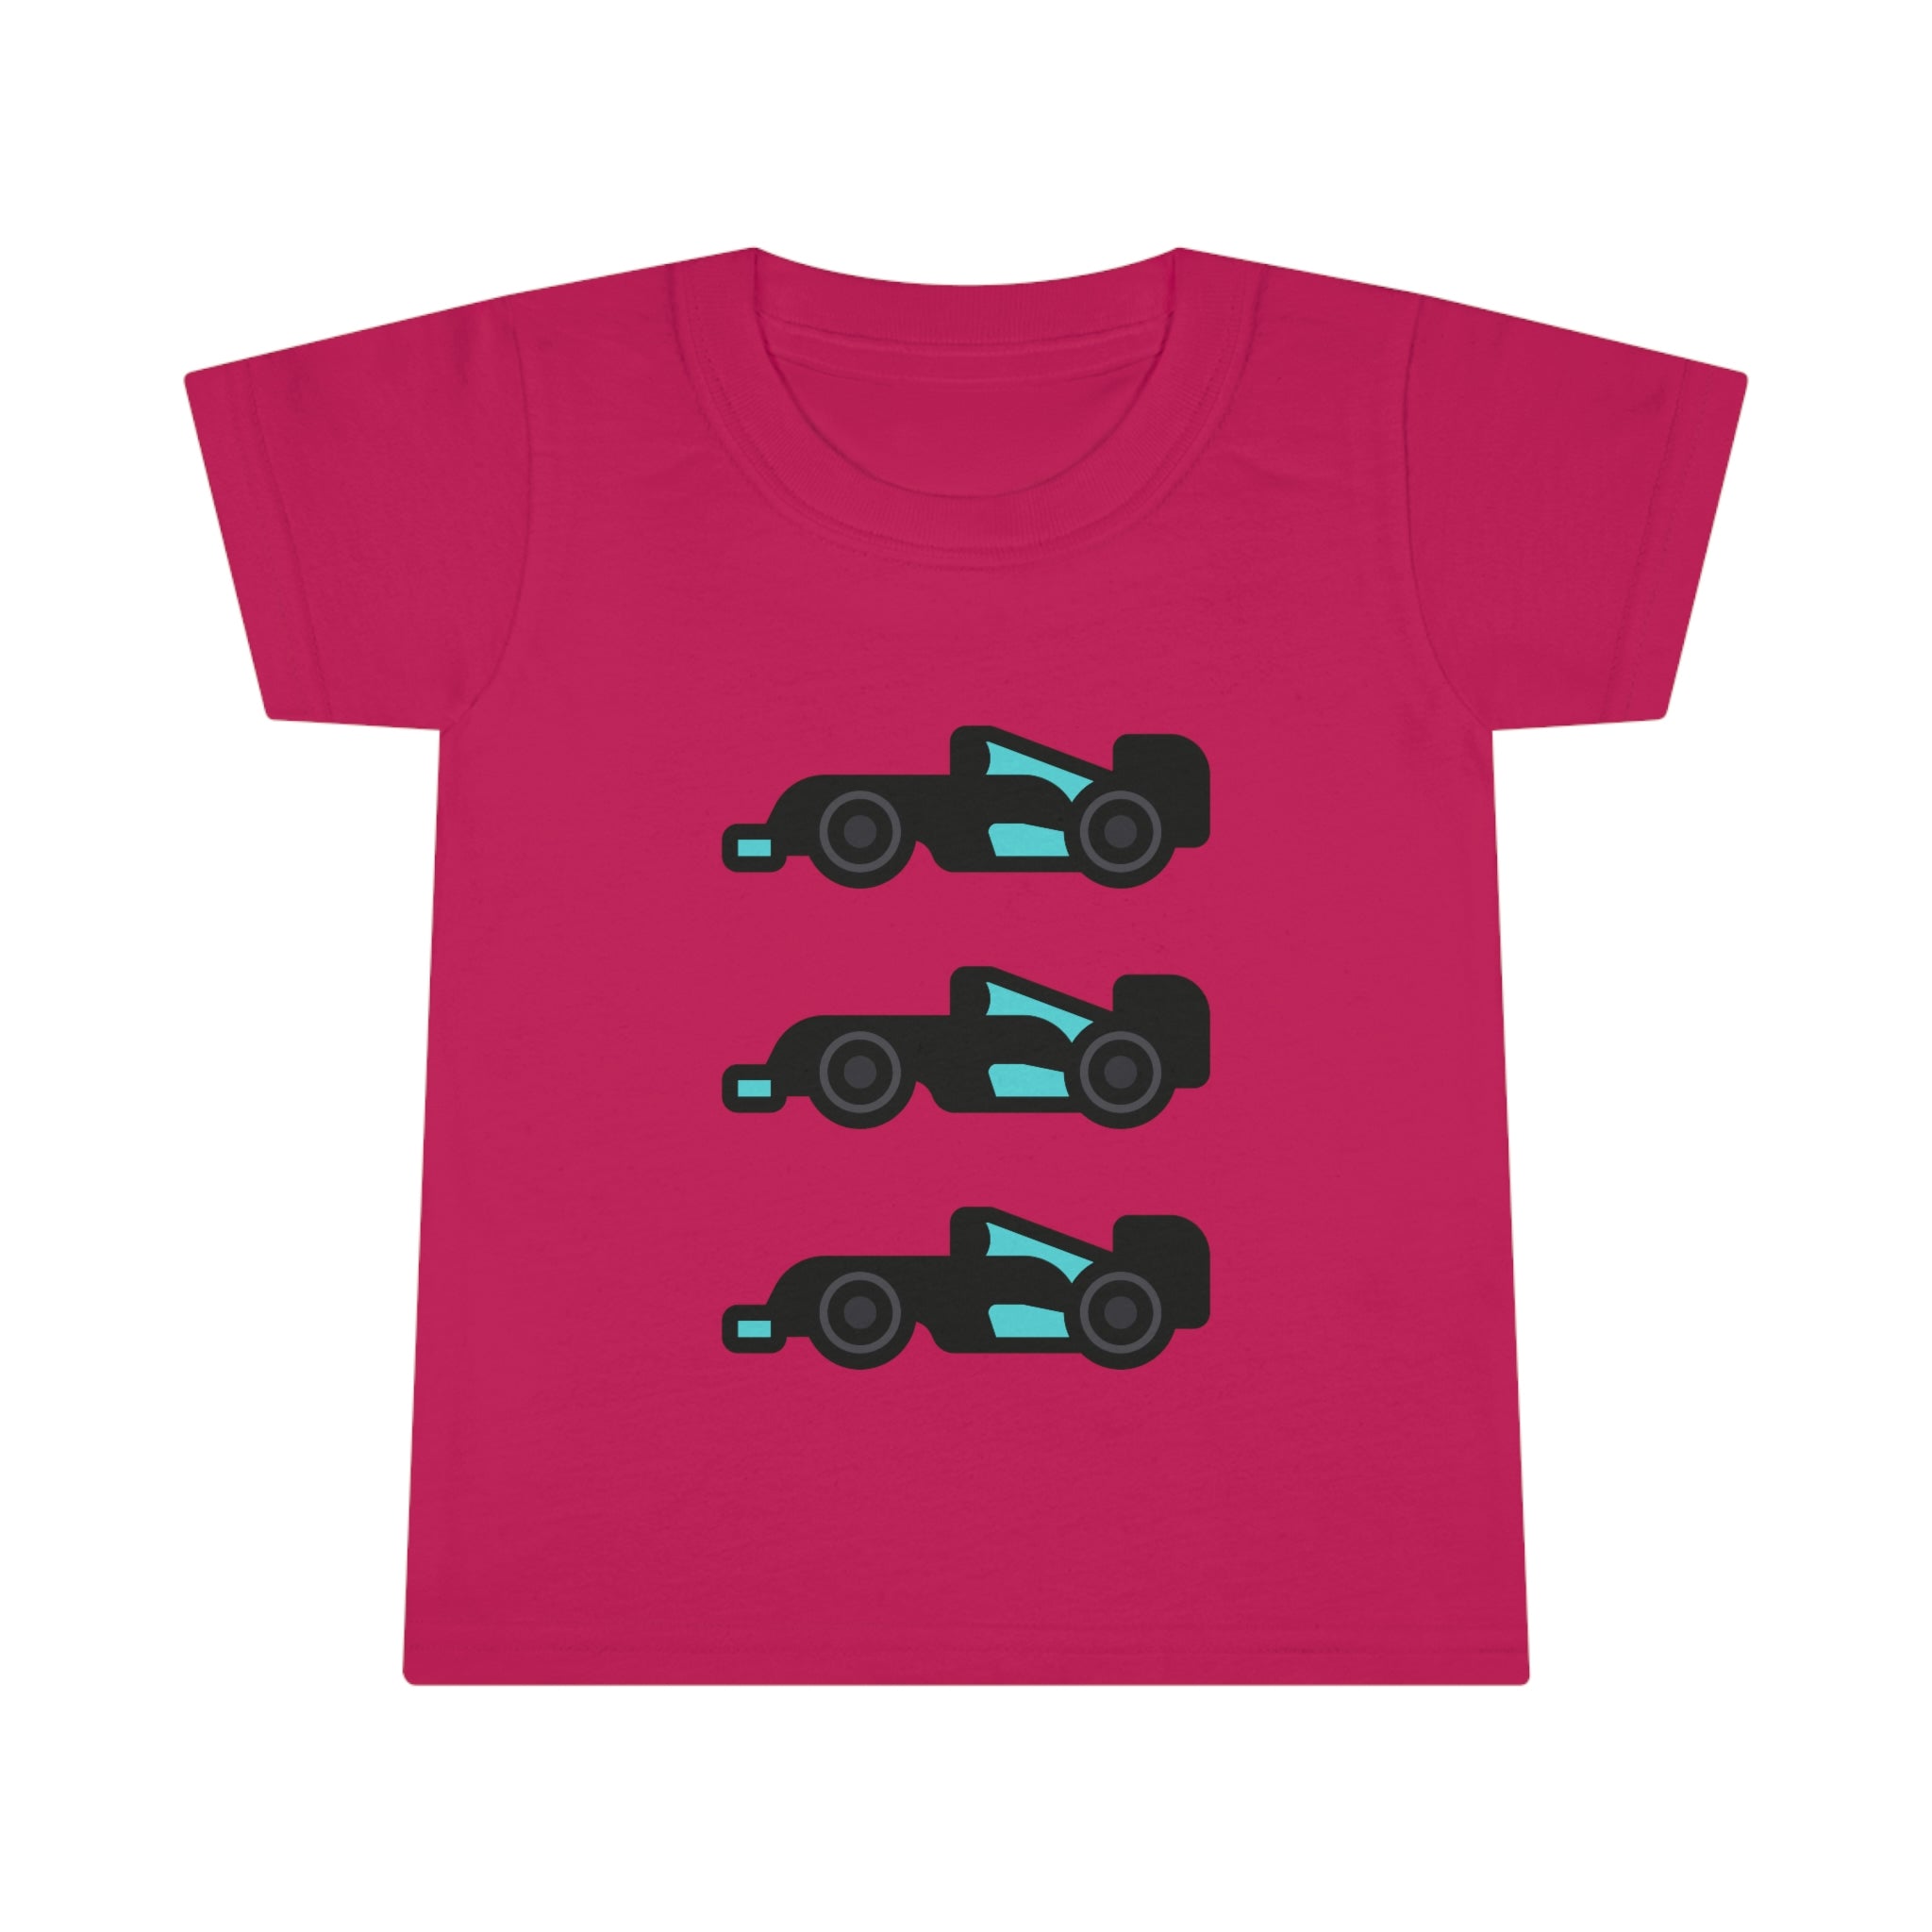 Motorsport Inspired Teal/Black Car Toddler T-shirt - FormulaFanatics